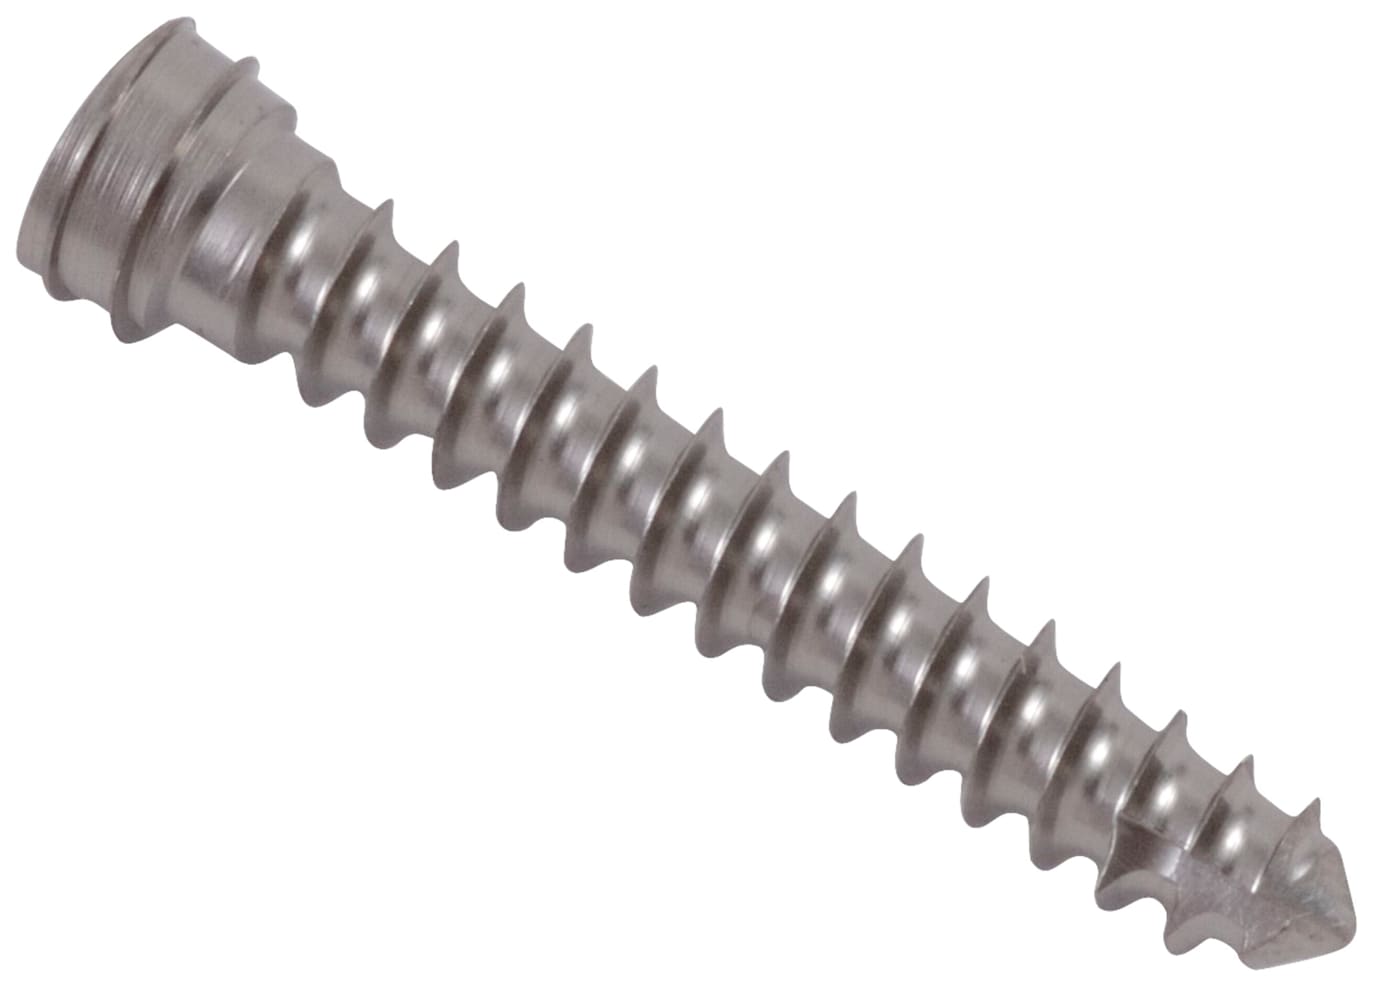 Cortical Locking Screw, 3.5 mm x 24 mm